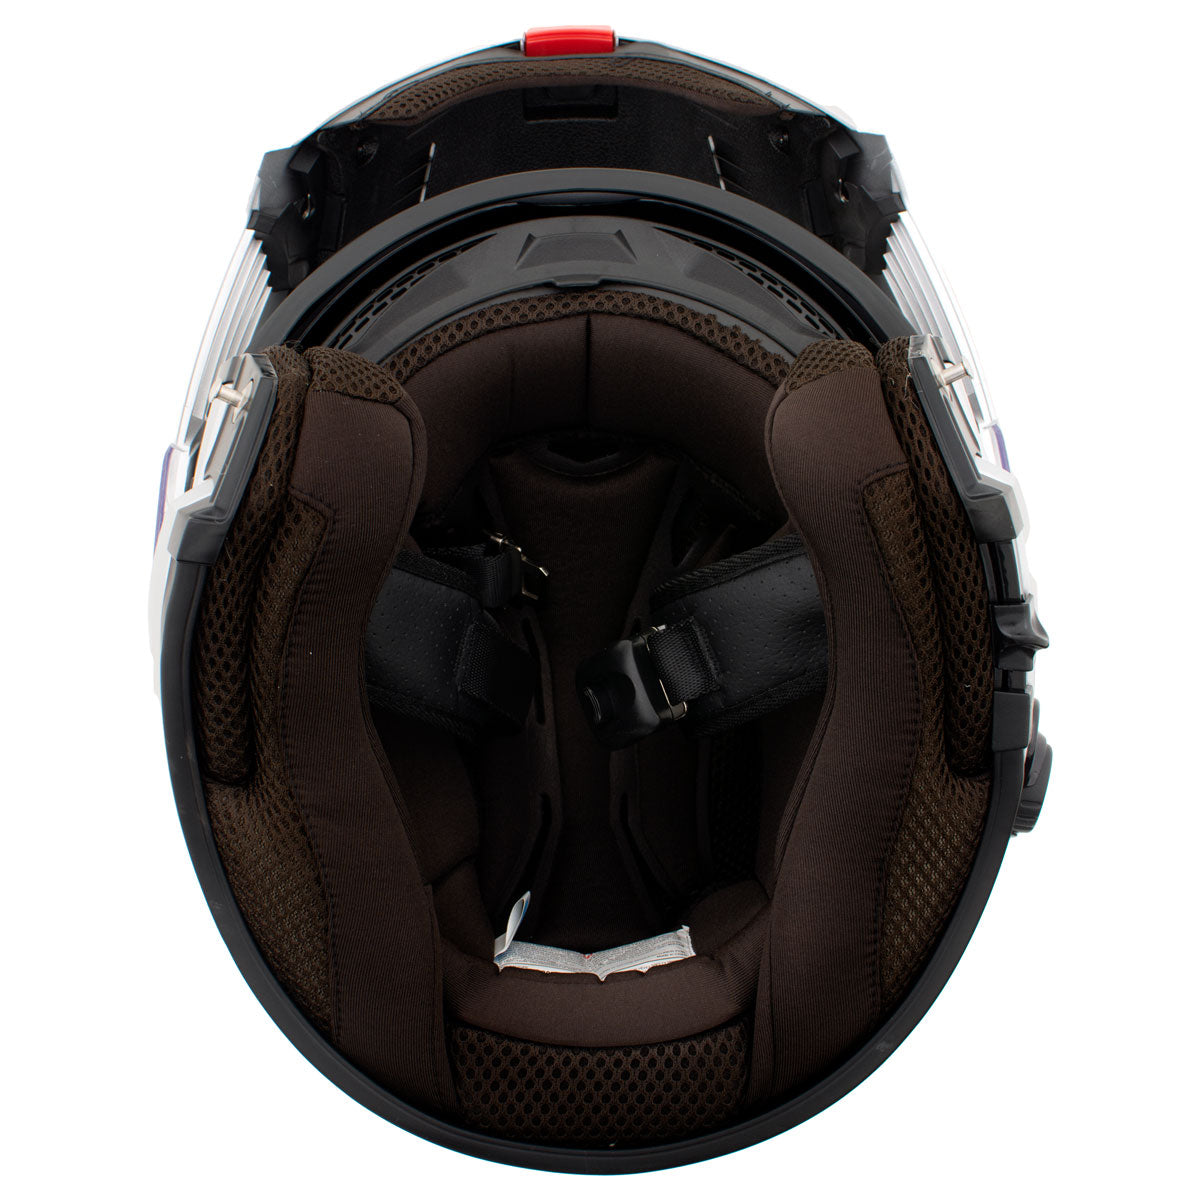 Milwaukee Helmets H7010 Flat Gray 'Mayday' Modular Motorcycle Helmet w/ Intercom - Built-in Speaker and Microphone for Men / Women